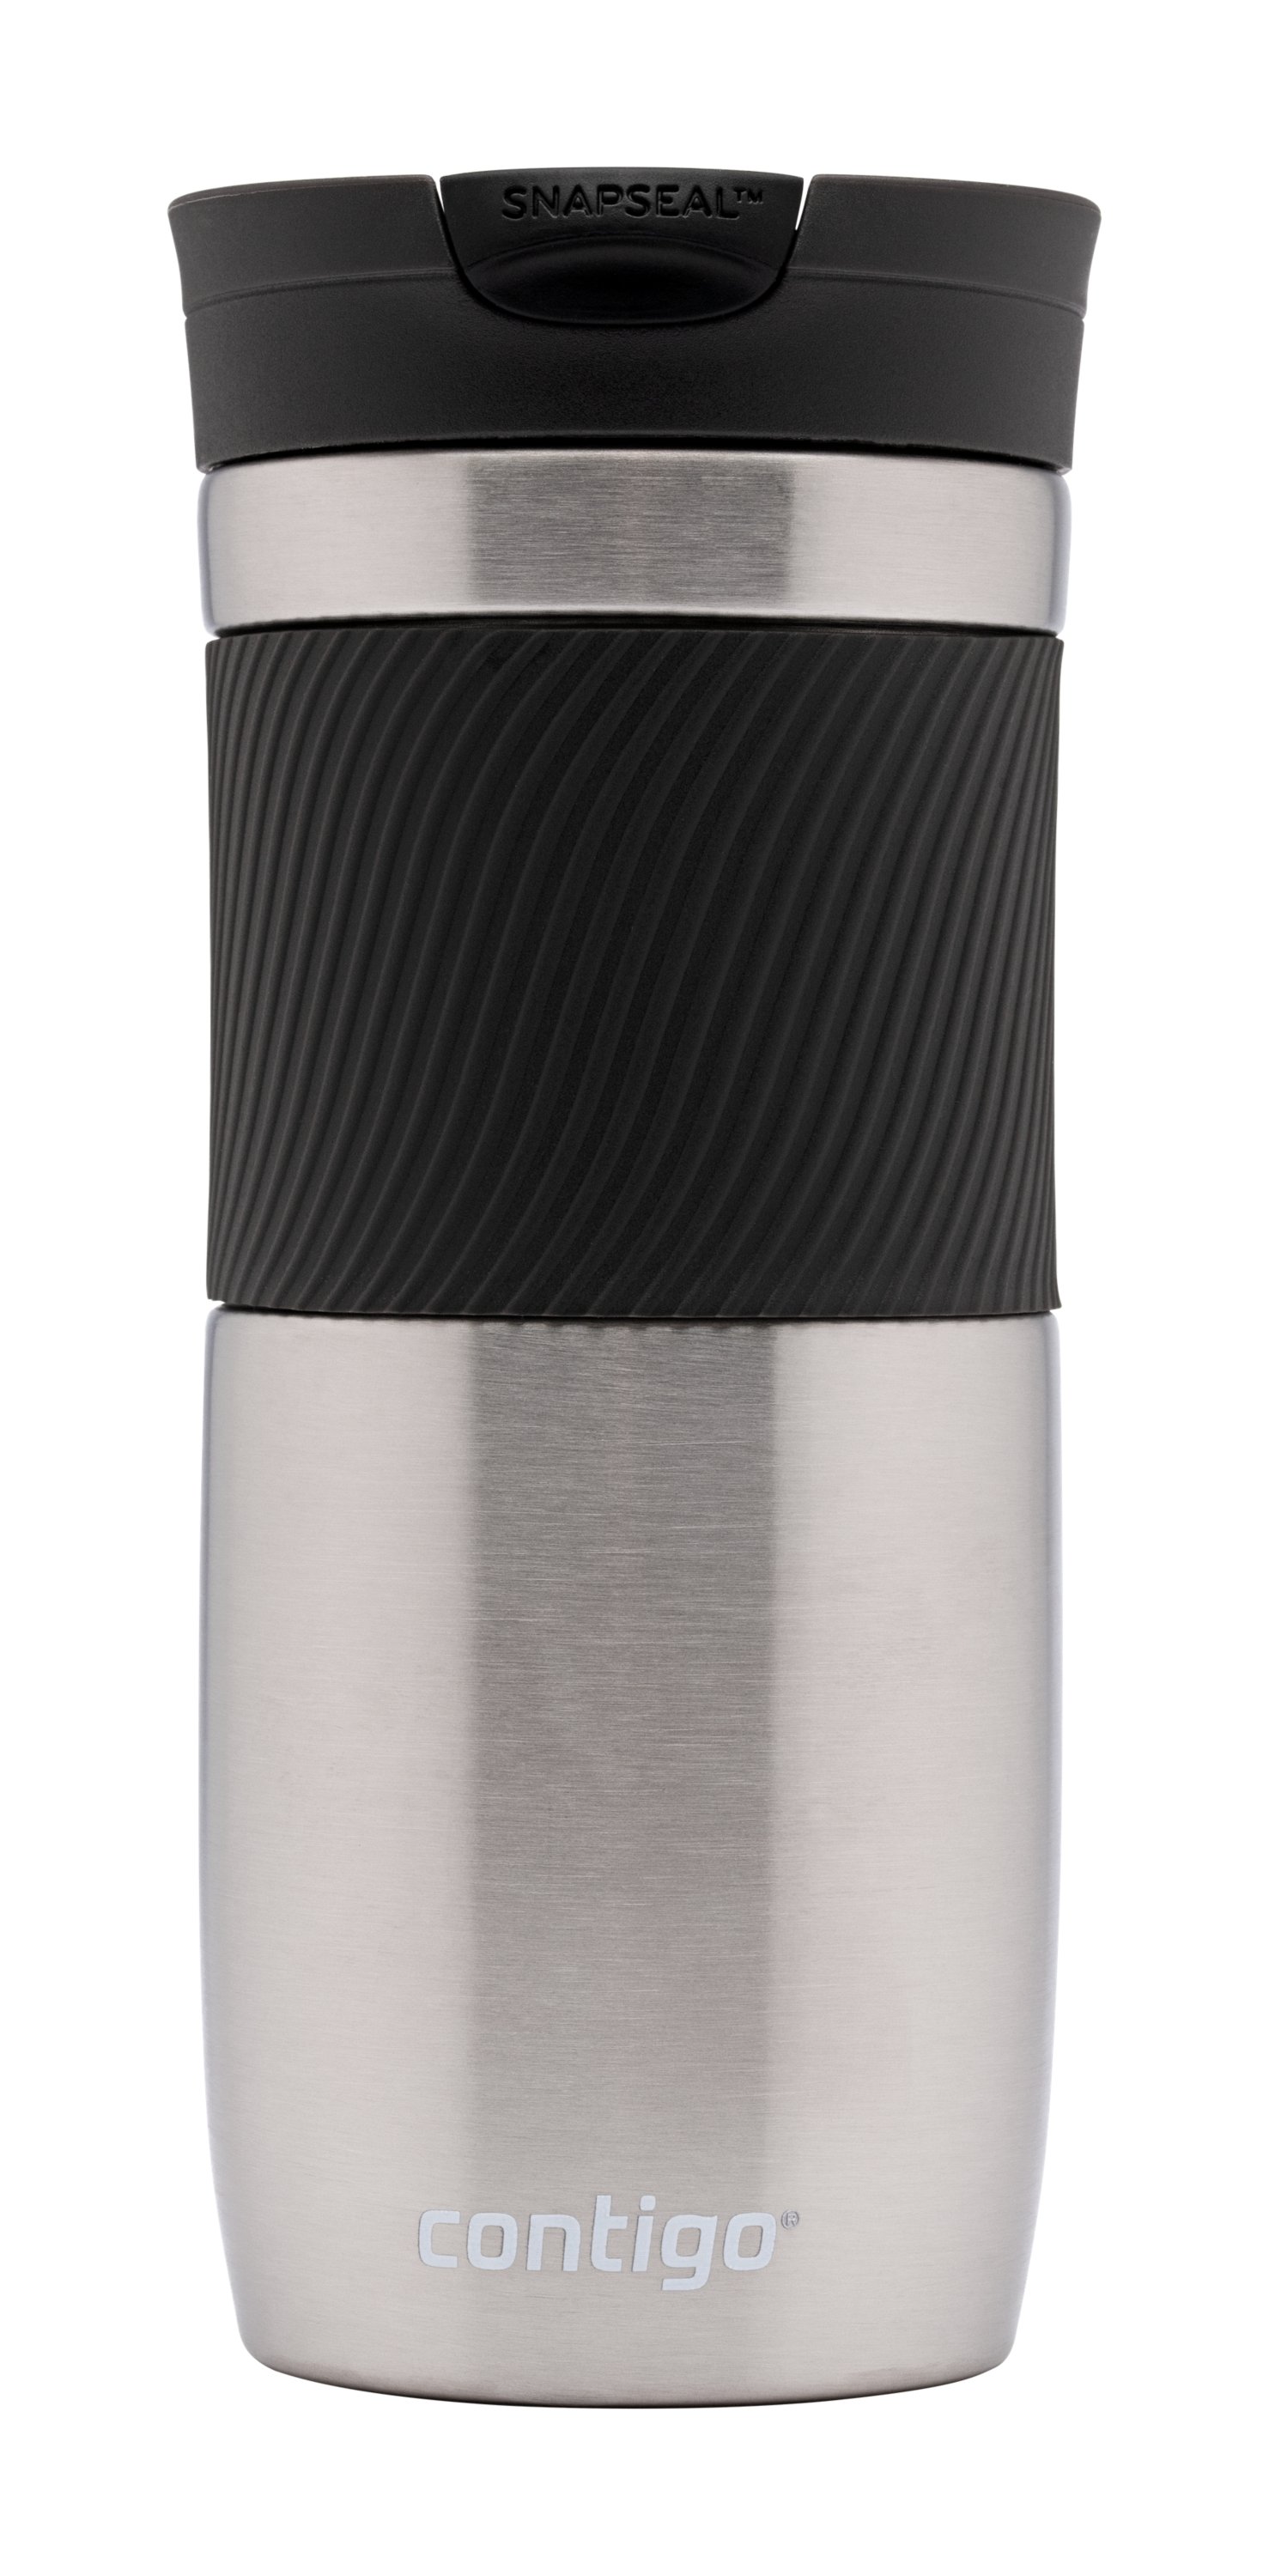 Contigo Luxe Autoseal Travel Mug, Stainless Steel Thermal Mug, Vacuum  Flask, Leakproof Tumbler, dishwasher safe, Coffee Mug with BPA Free  Easy-Clean